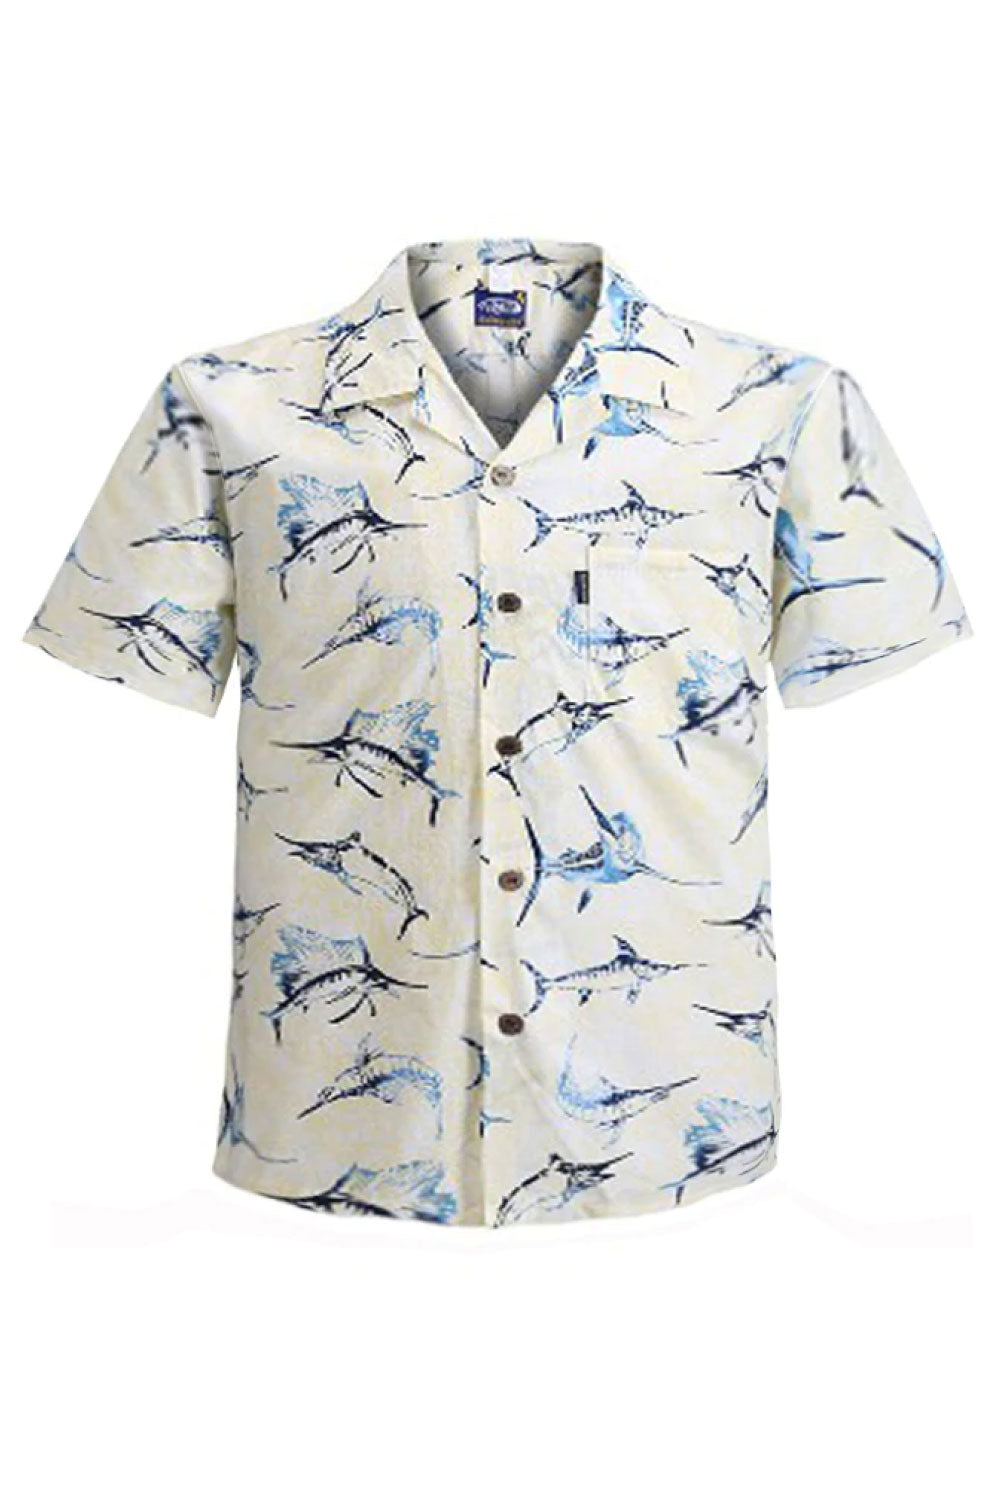 Image of the front of Palmwave's Yellow Marlin Aloha Men's Shirt.